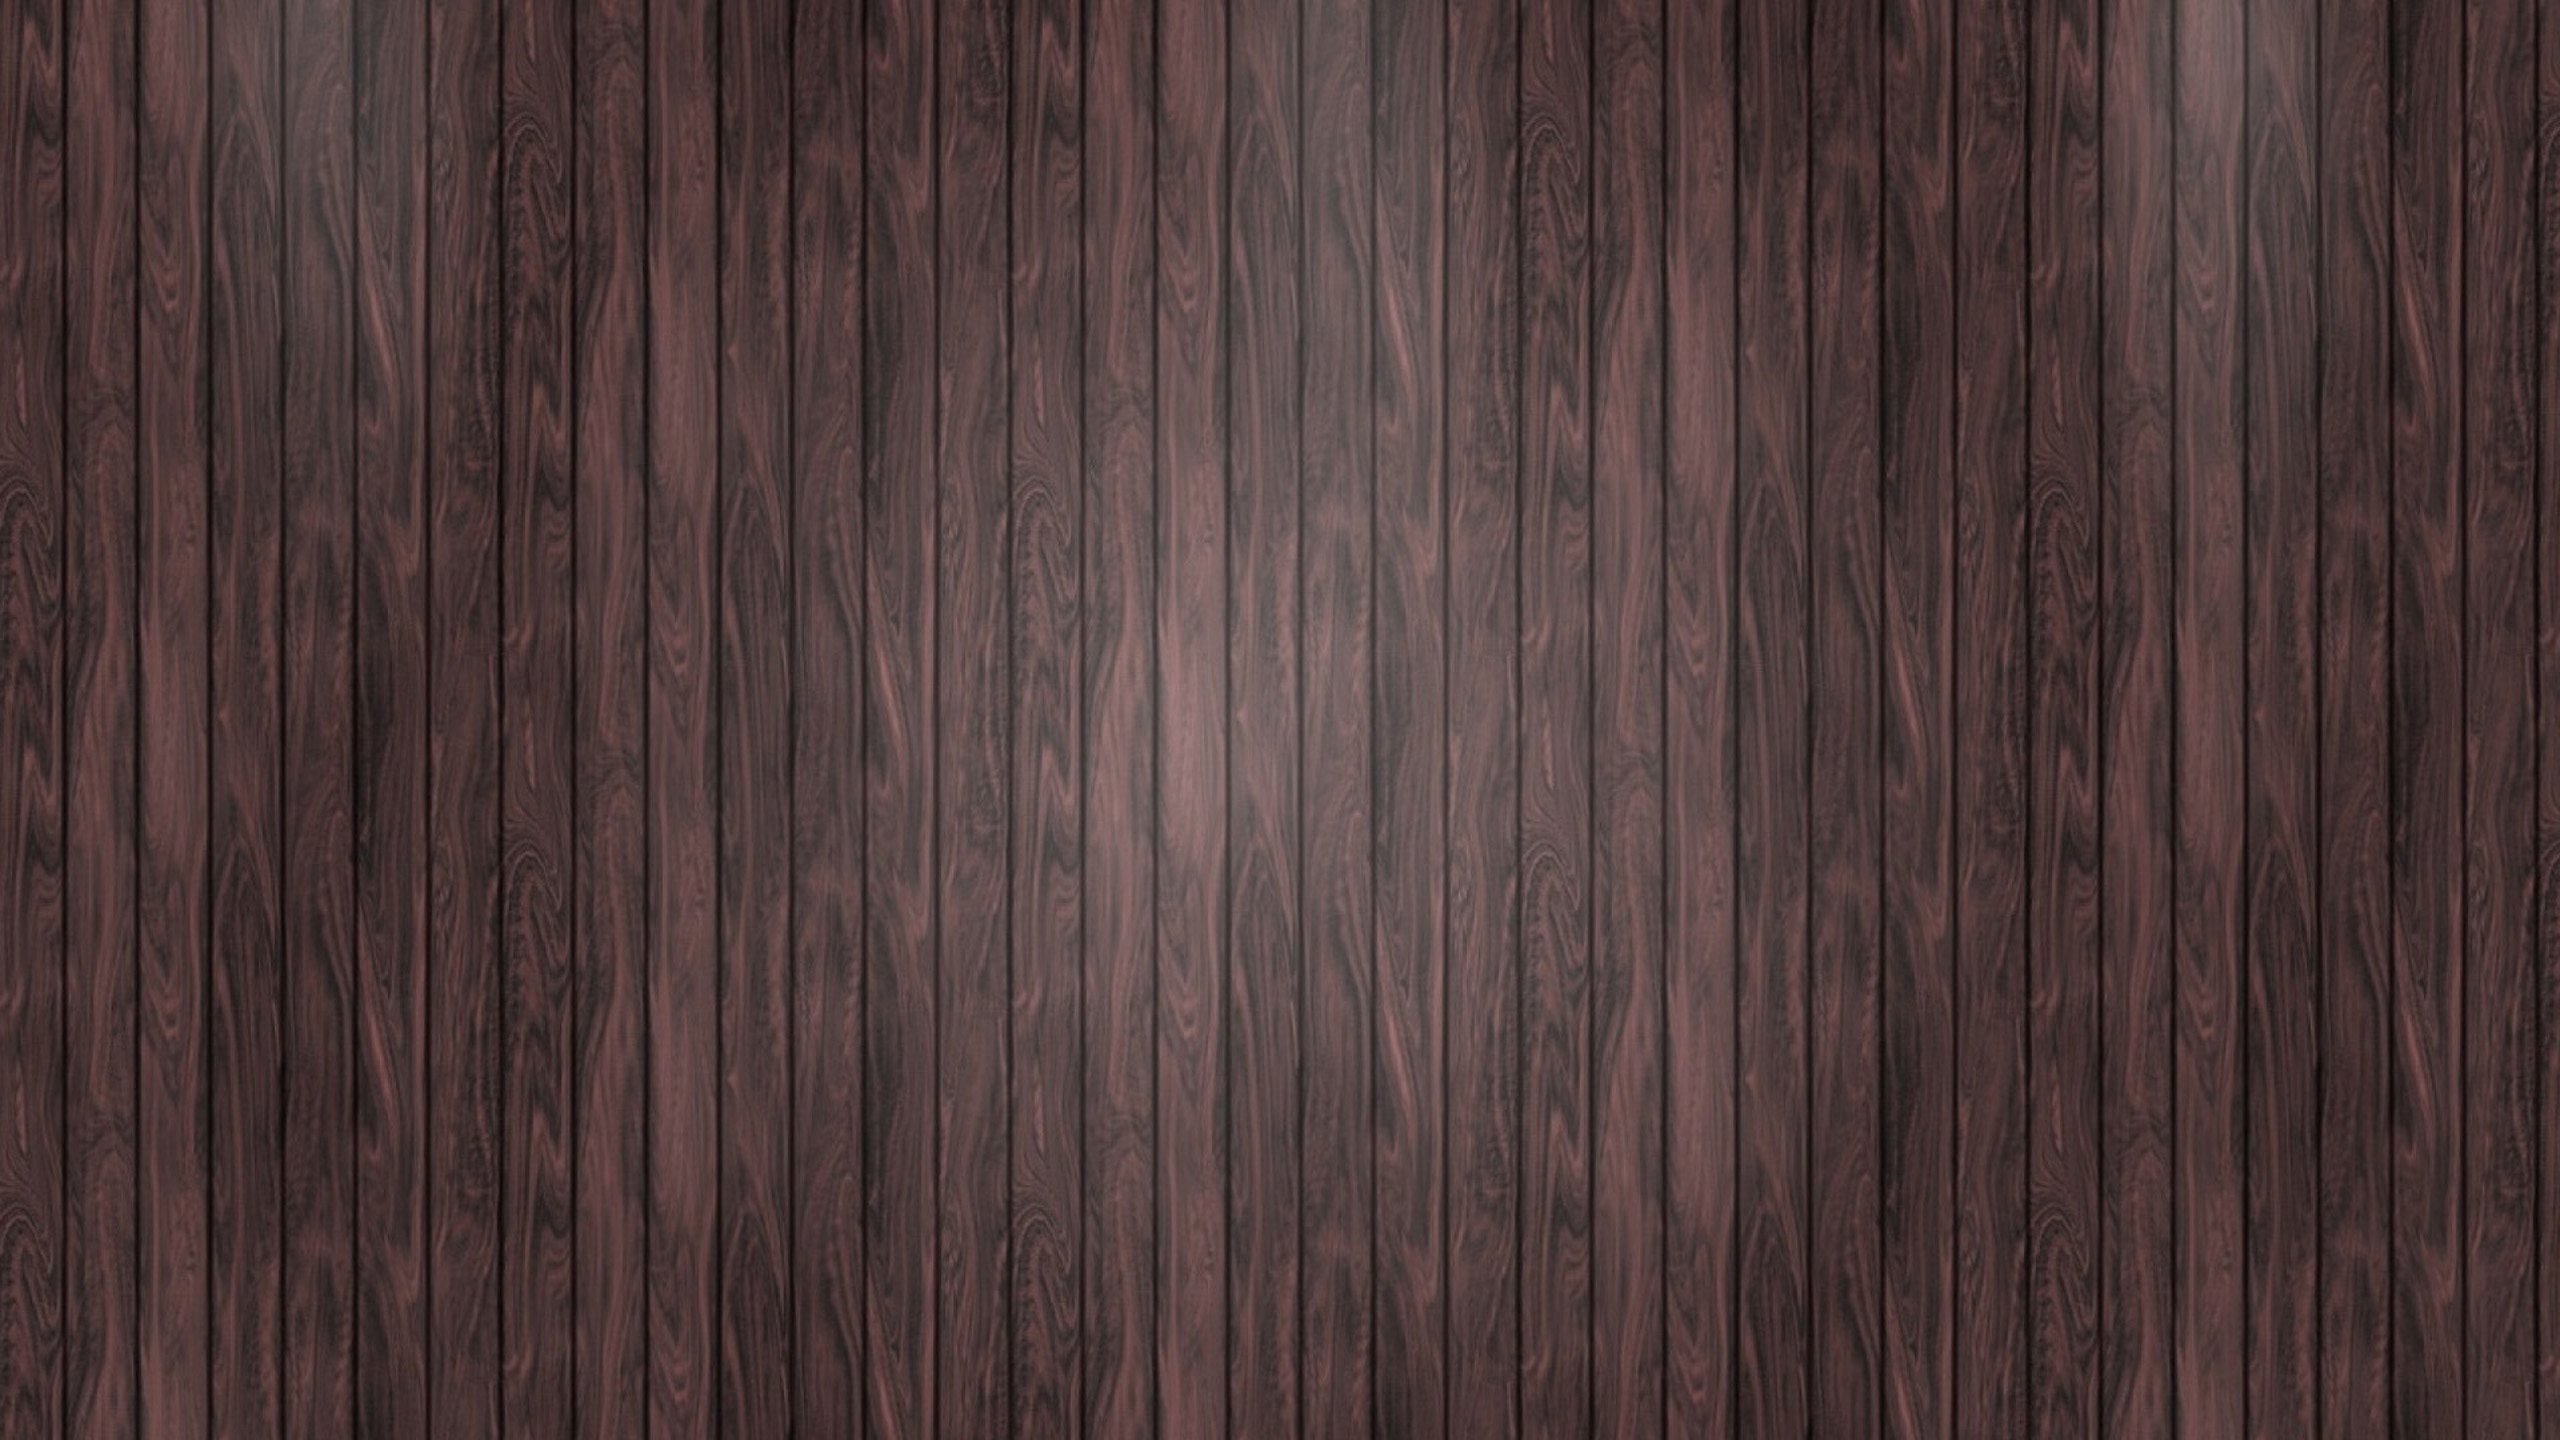 Wood paneling wallpaper, HD Desktop Backgrounds